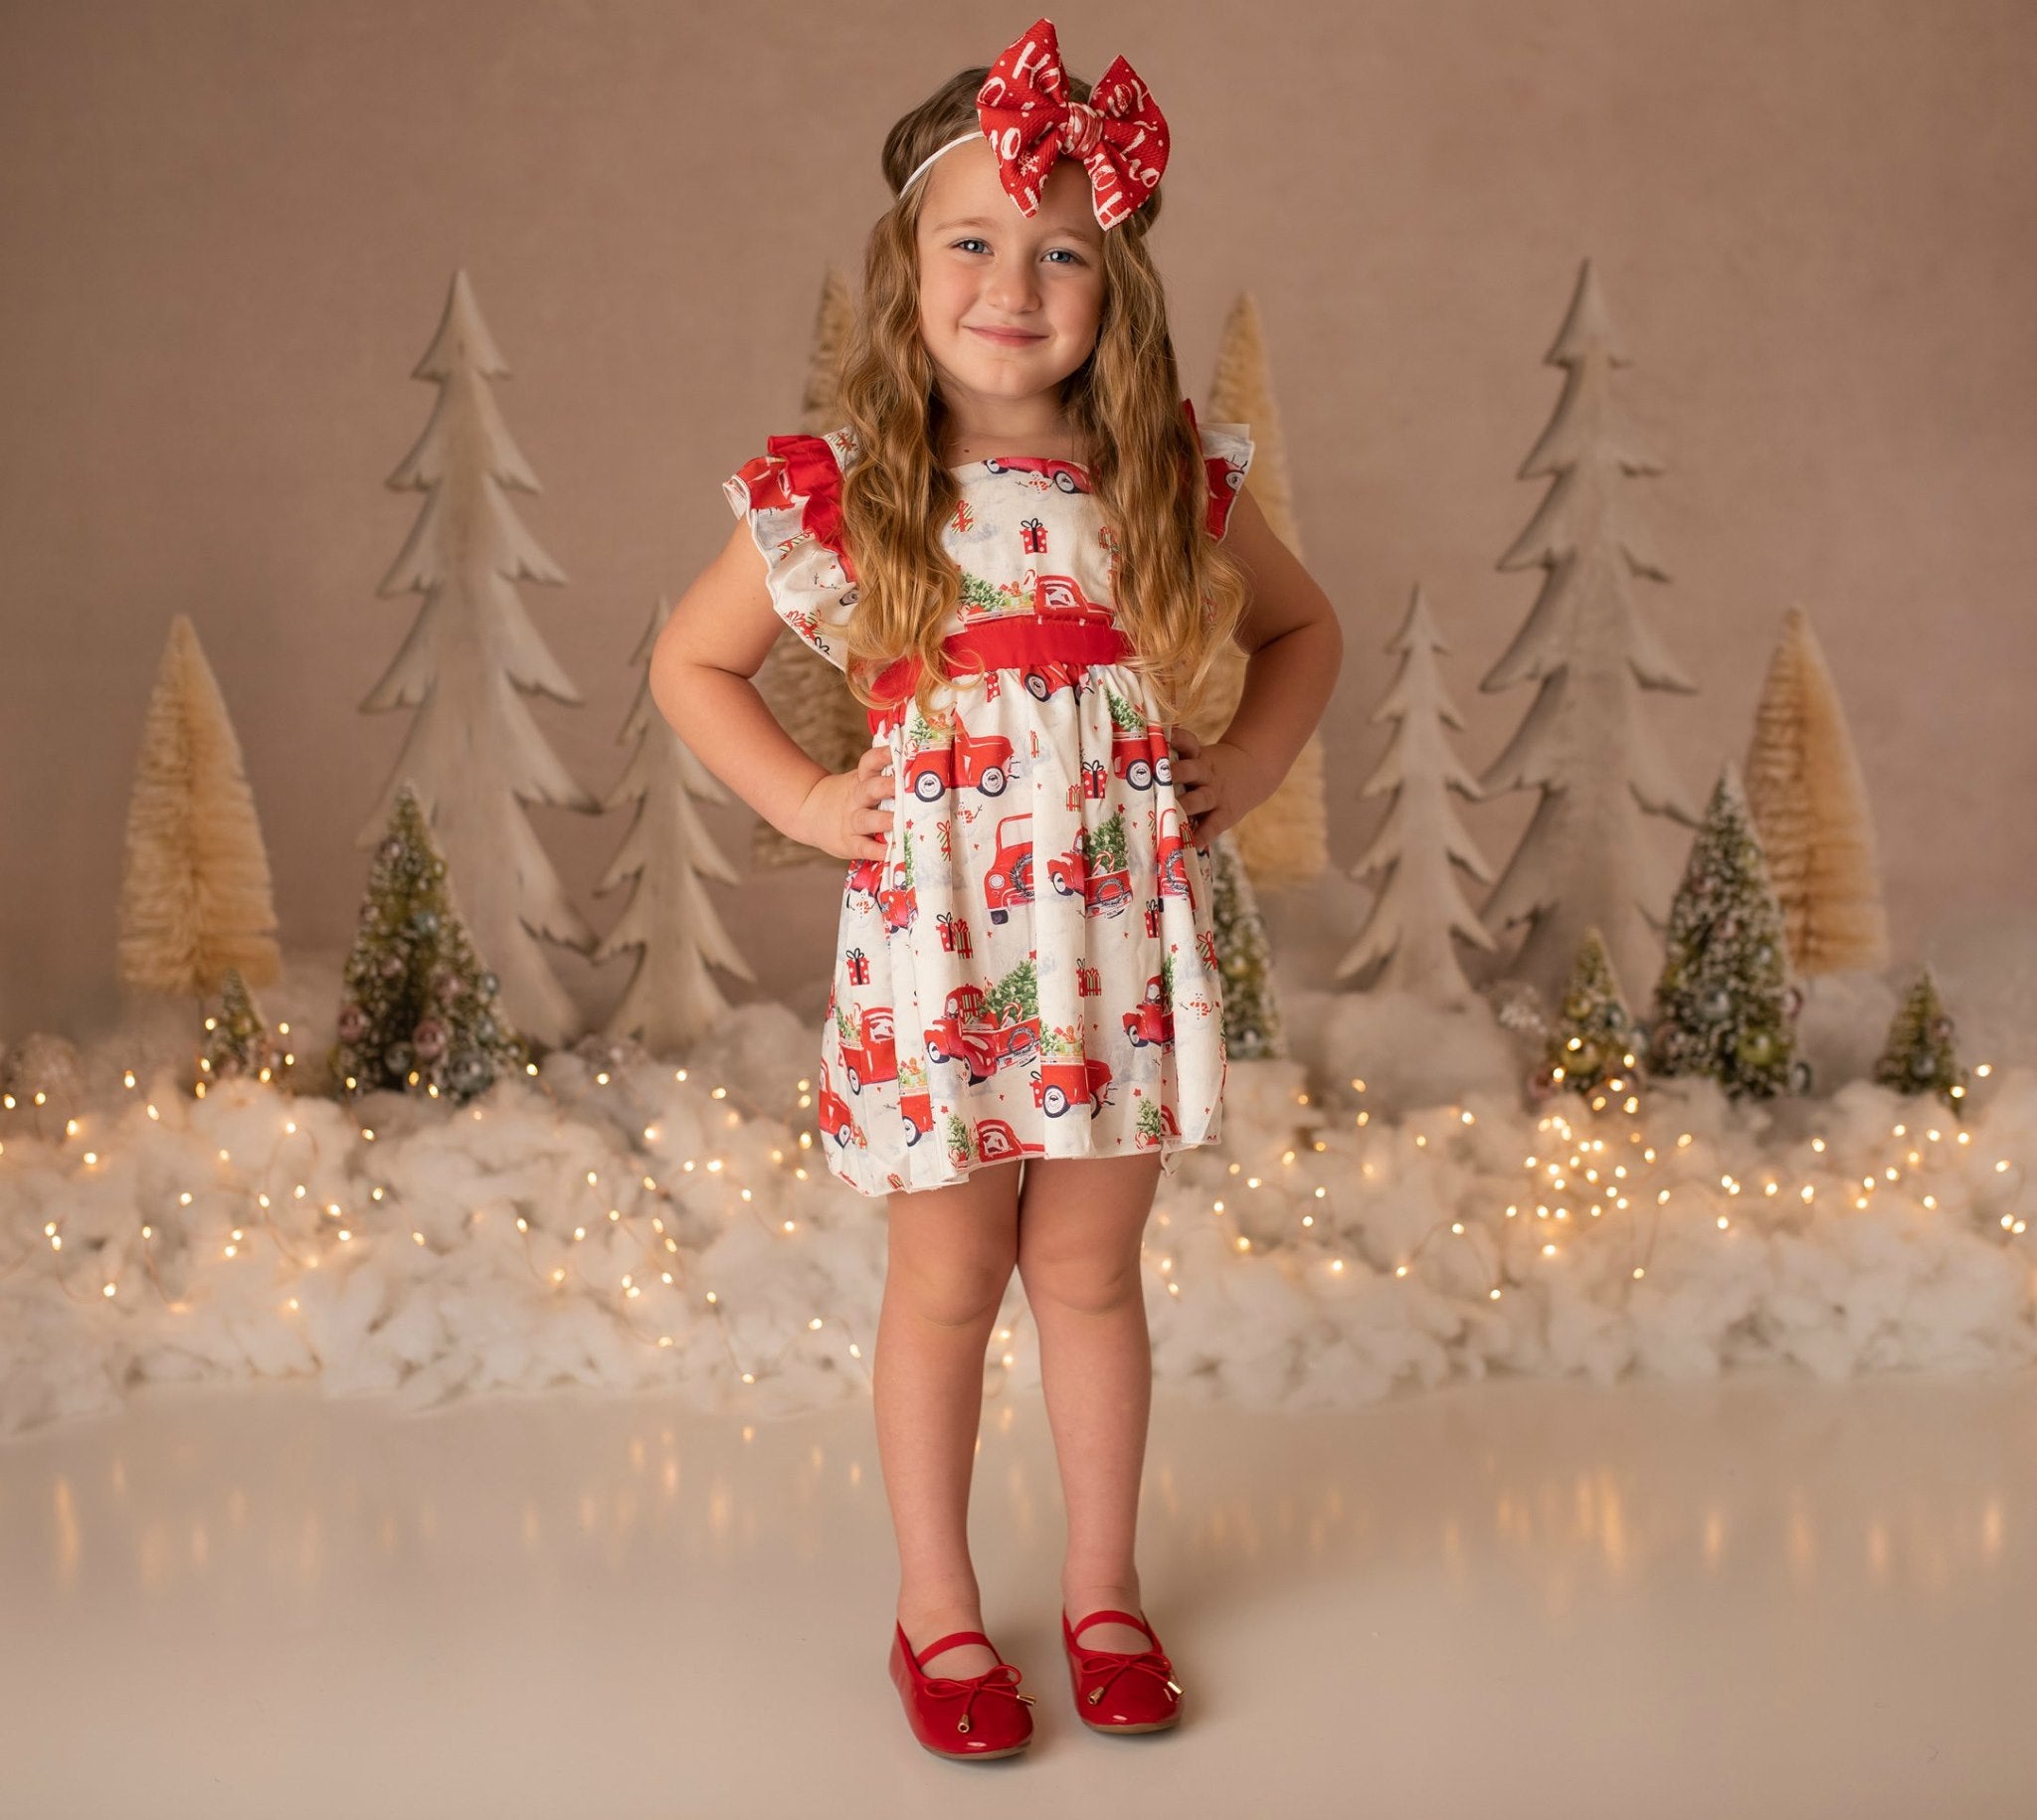 Kate Elegant Christmas Trees with Glitter Backdrop Designed By Mandy Ringe Photography